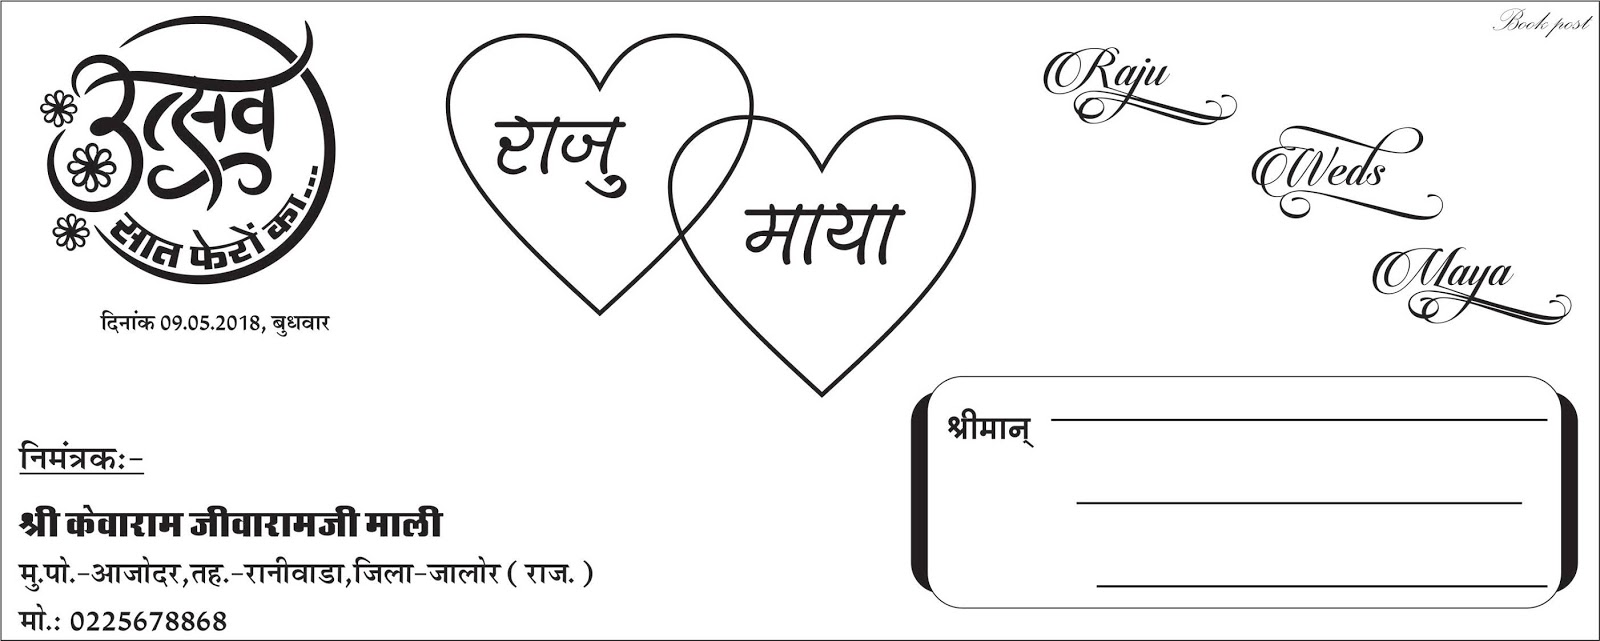 Hindu Wedding Cards-shadi card design| Hindu Wedding Cards ...